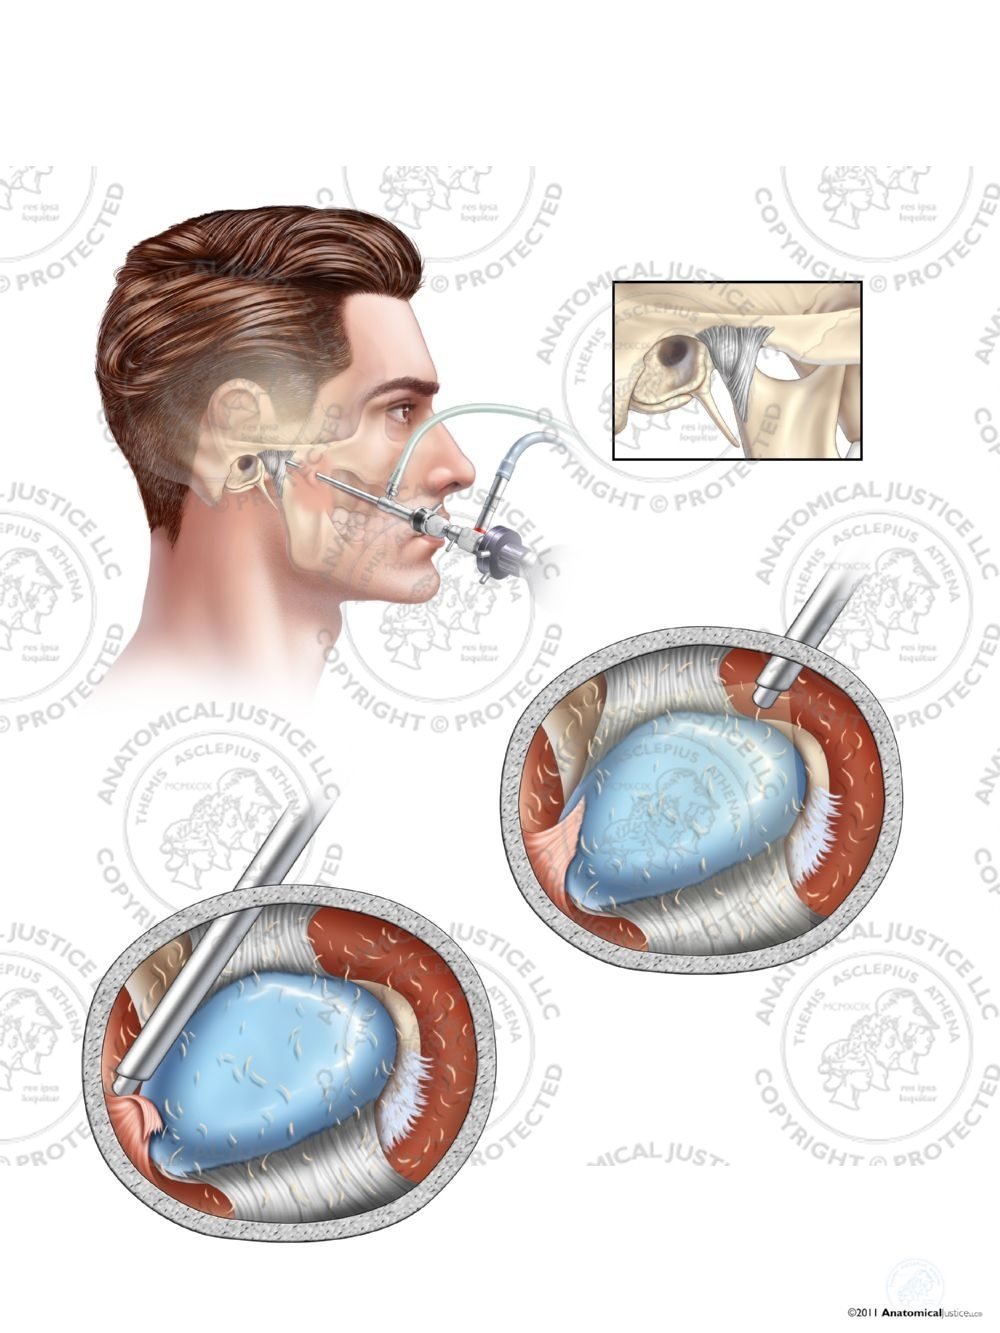 Male Arthroscopic Surgery of the Right Temporomandibular Joint (TMJ) – No Text